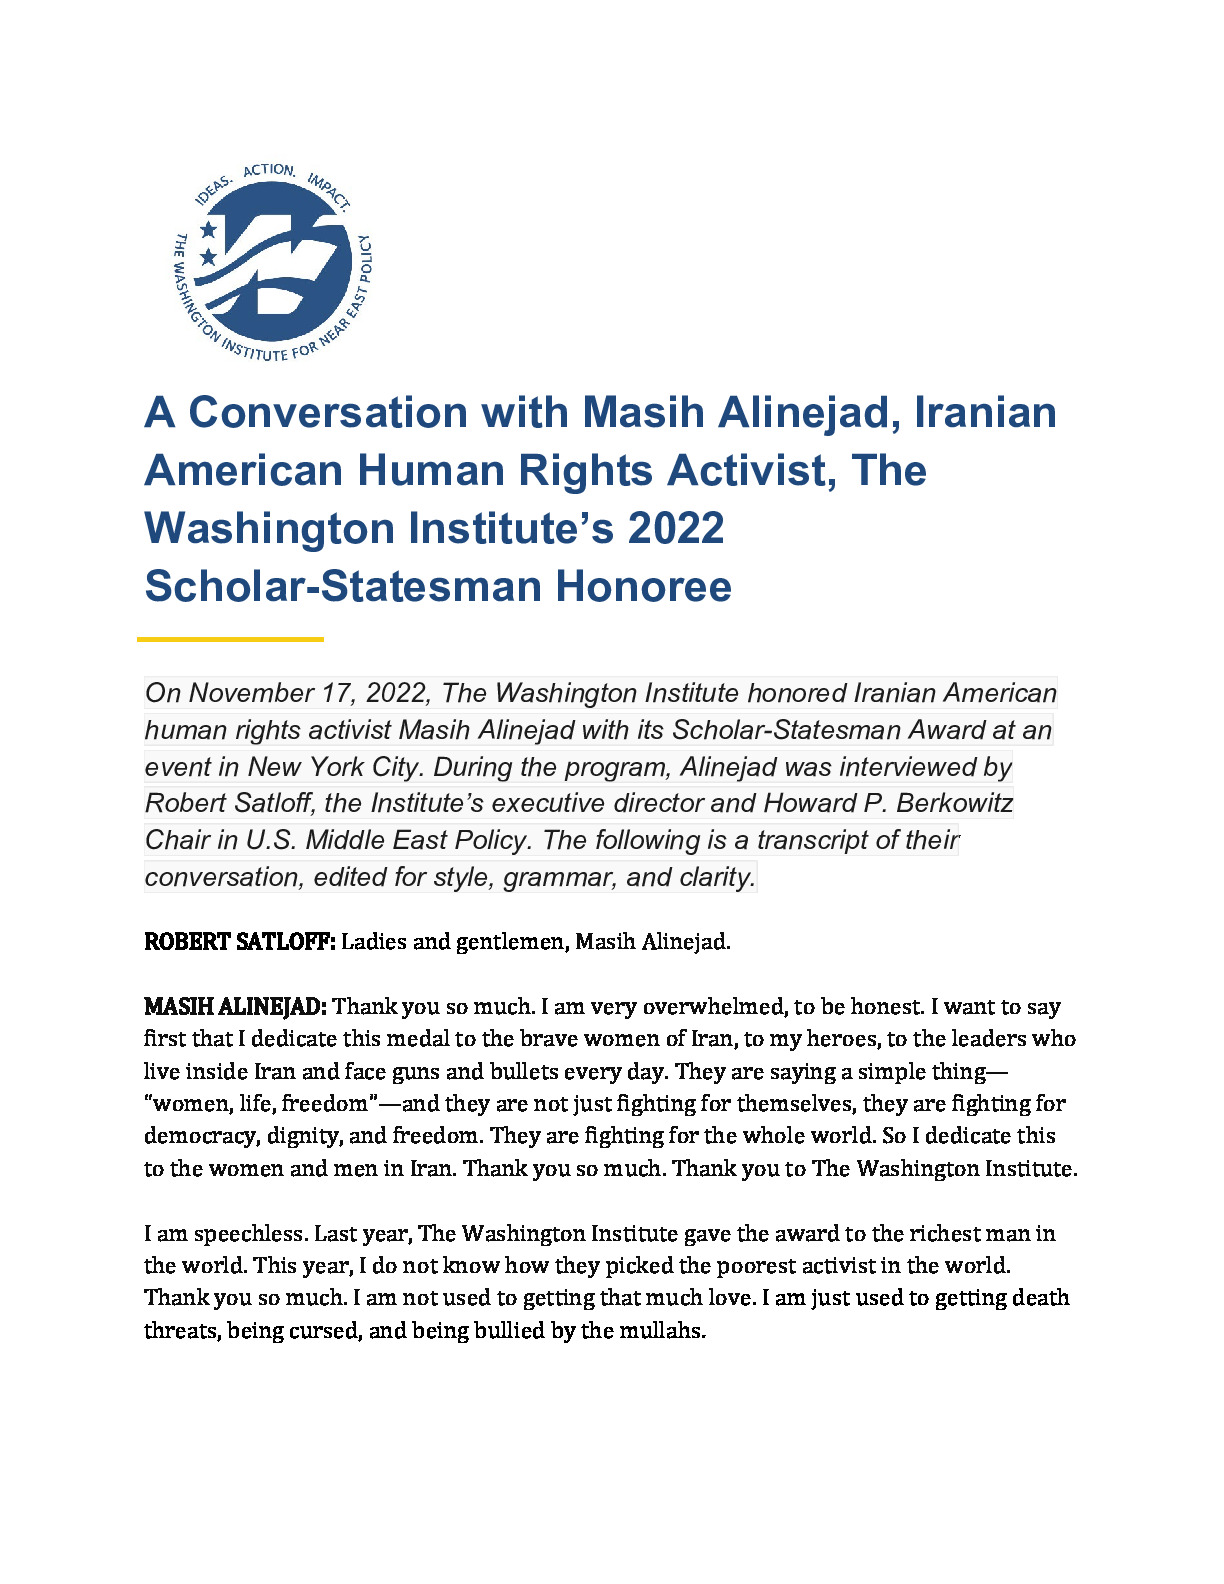 Masih Alinejad Scholar-Statesman Award Transcript